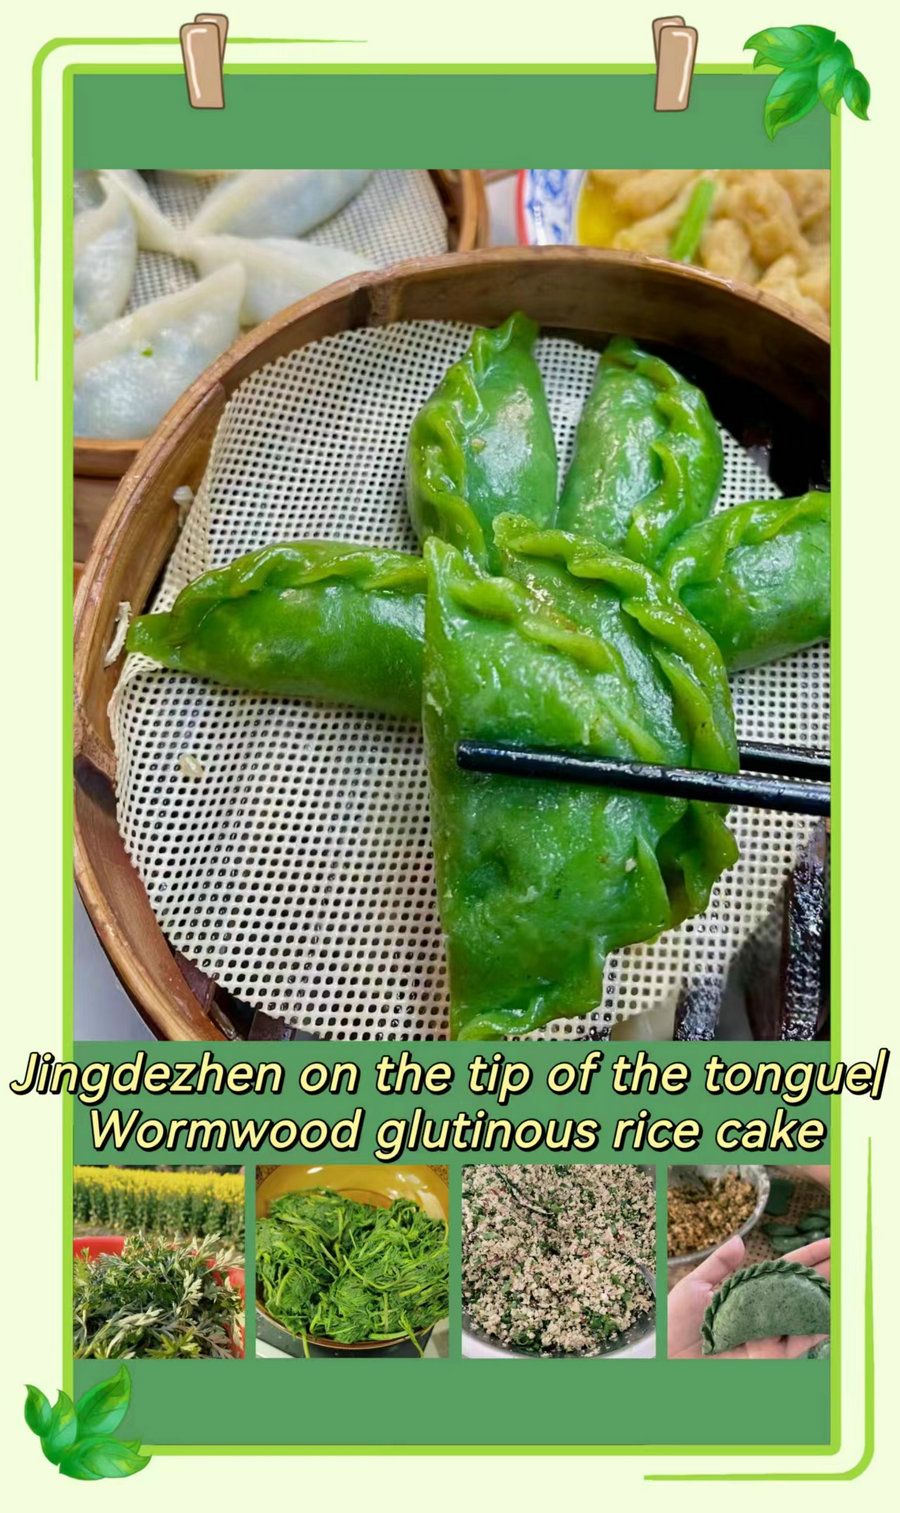 Wormwood glutinous rice cake